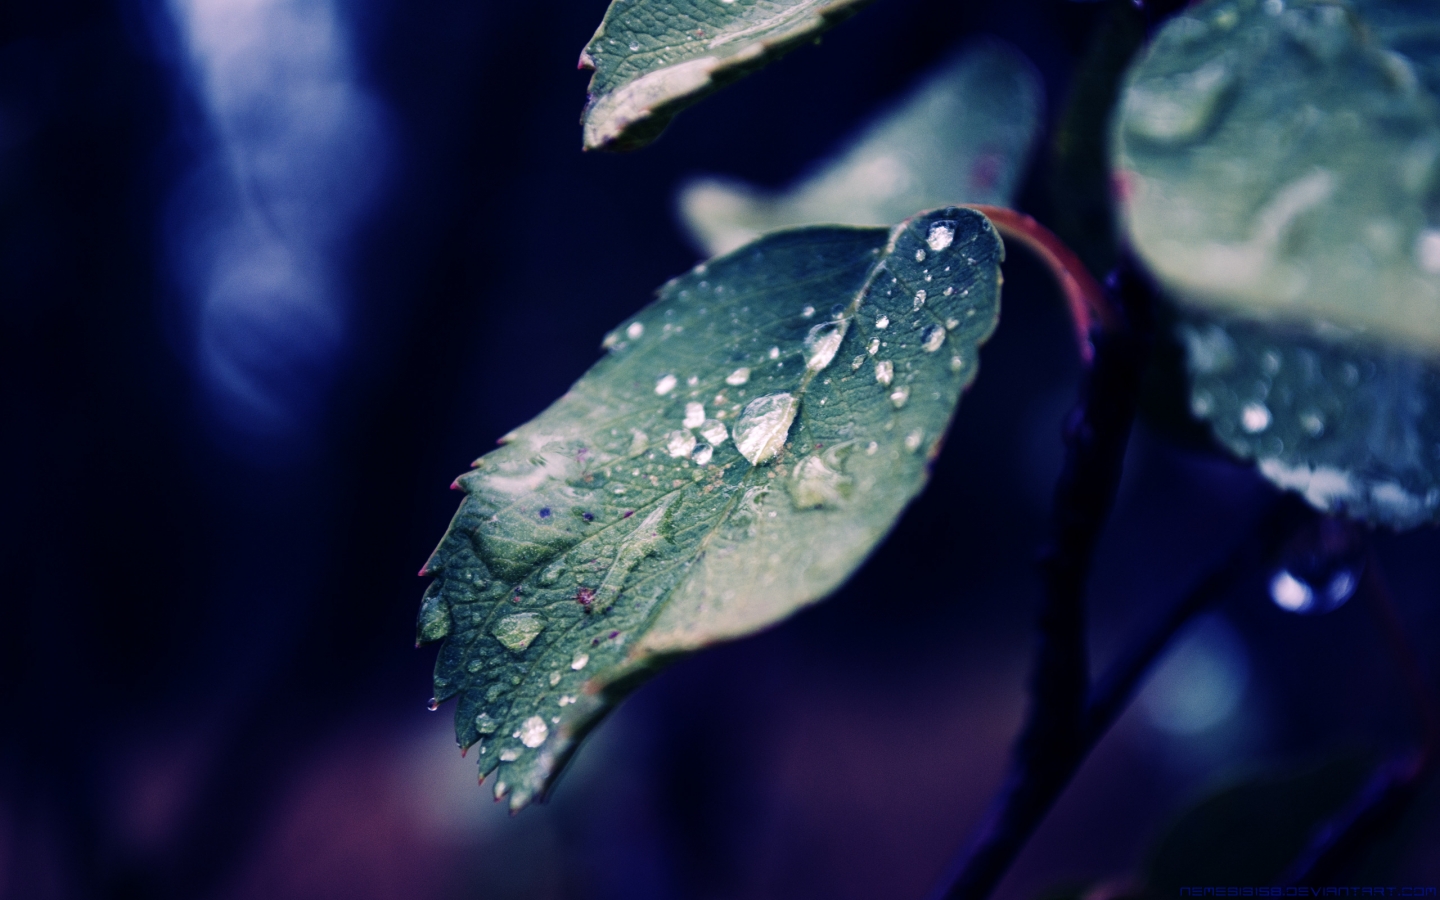 Fall Rain for 1440 x 900 widescreen resolution